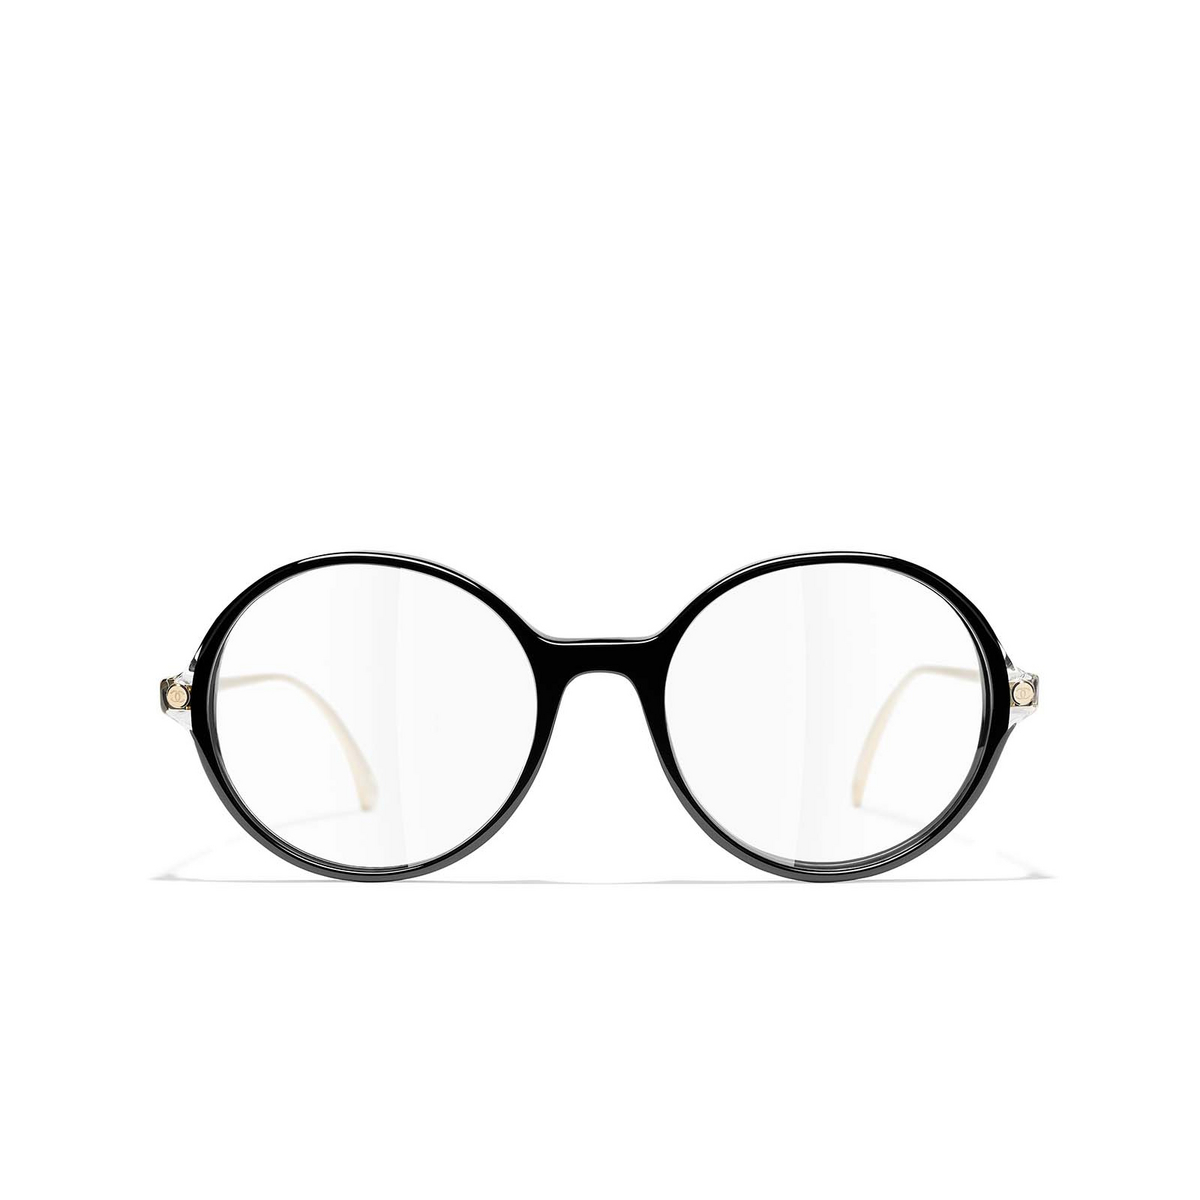 CHANEL round Eyeglasses C501 Black - front view